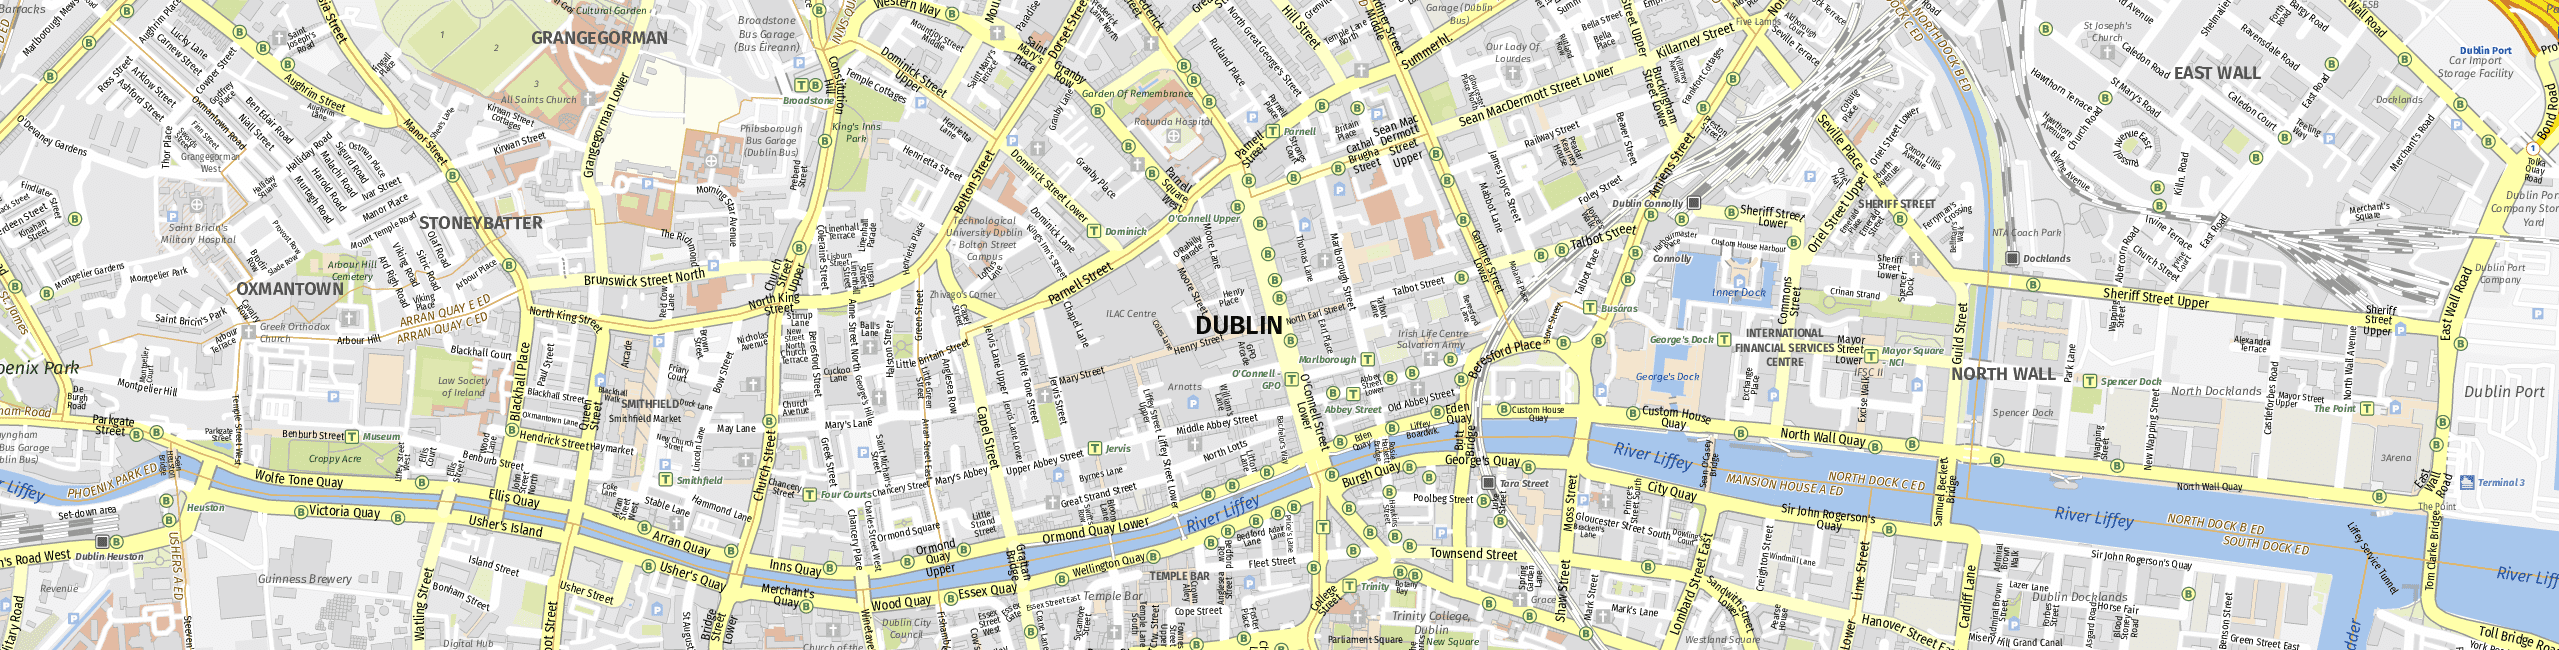 Stadtplan Dublin zum Downloaden.